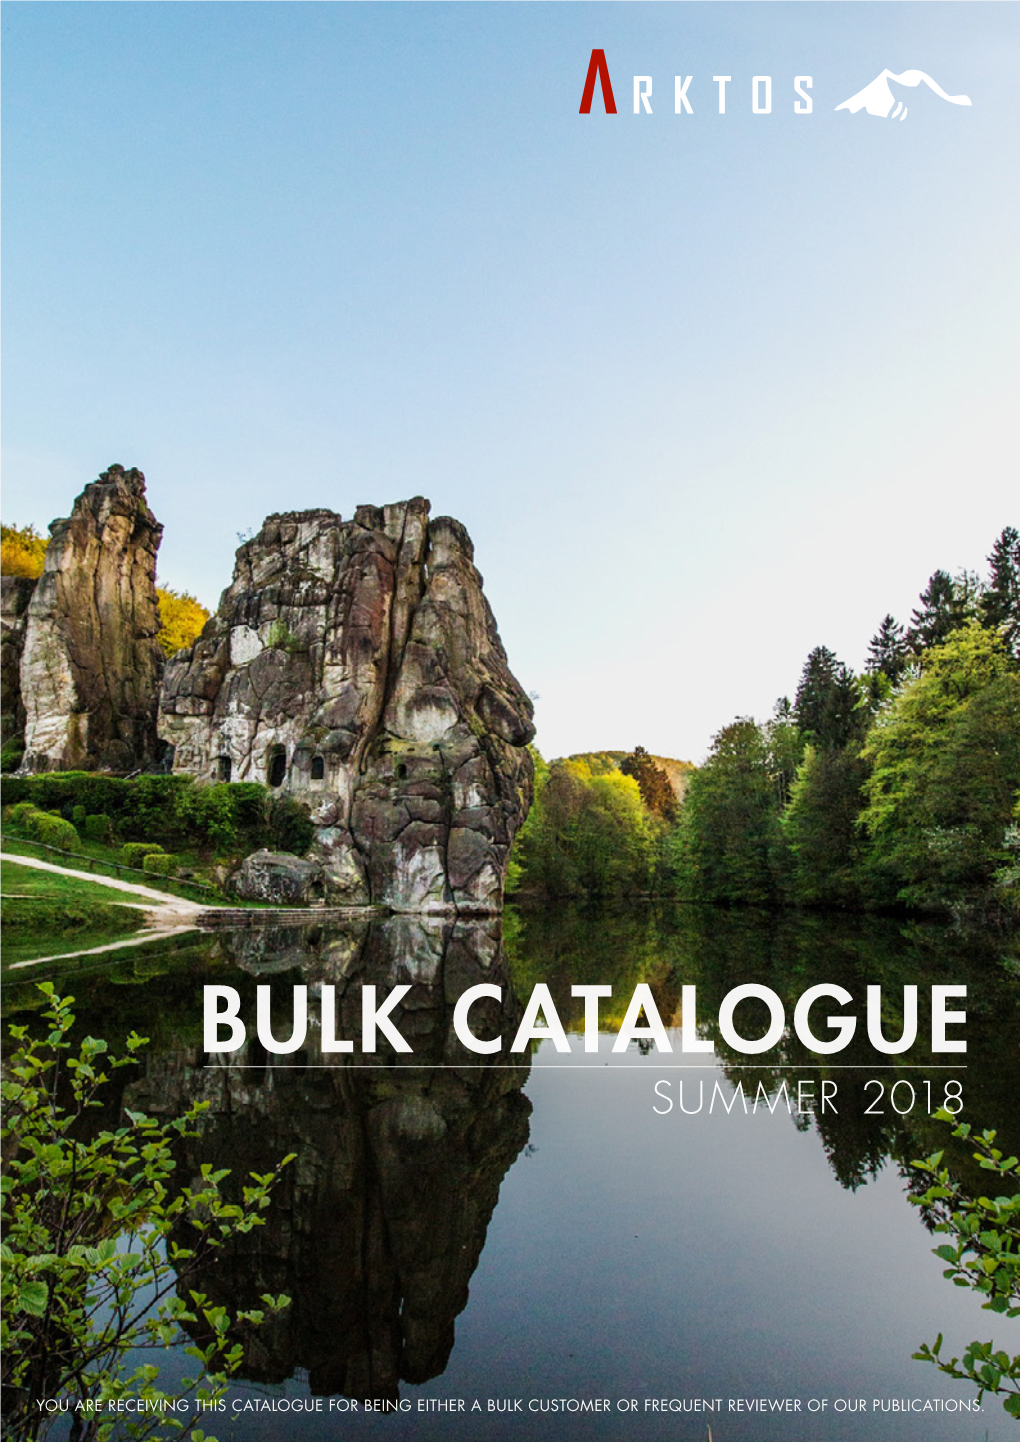 Arktos Bulk Catalogue